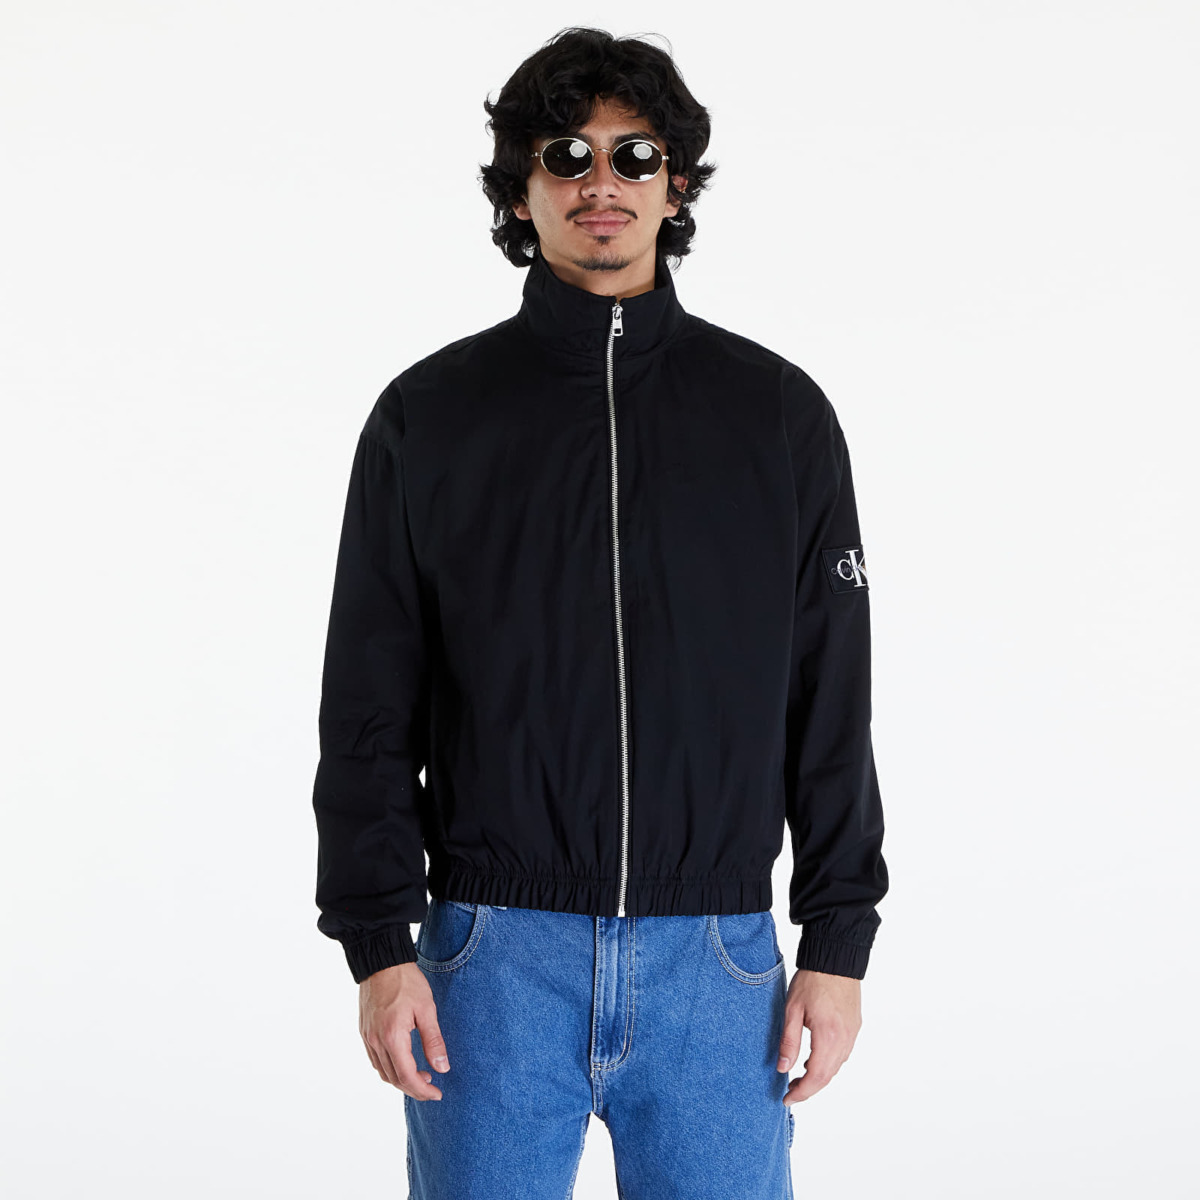 Calvin Klein - Black Jacket by Footshop GOOFASH